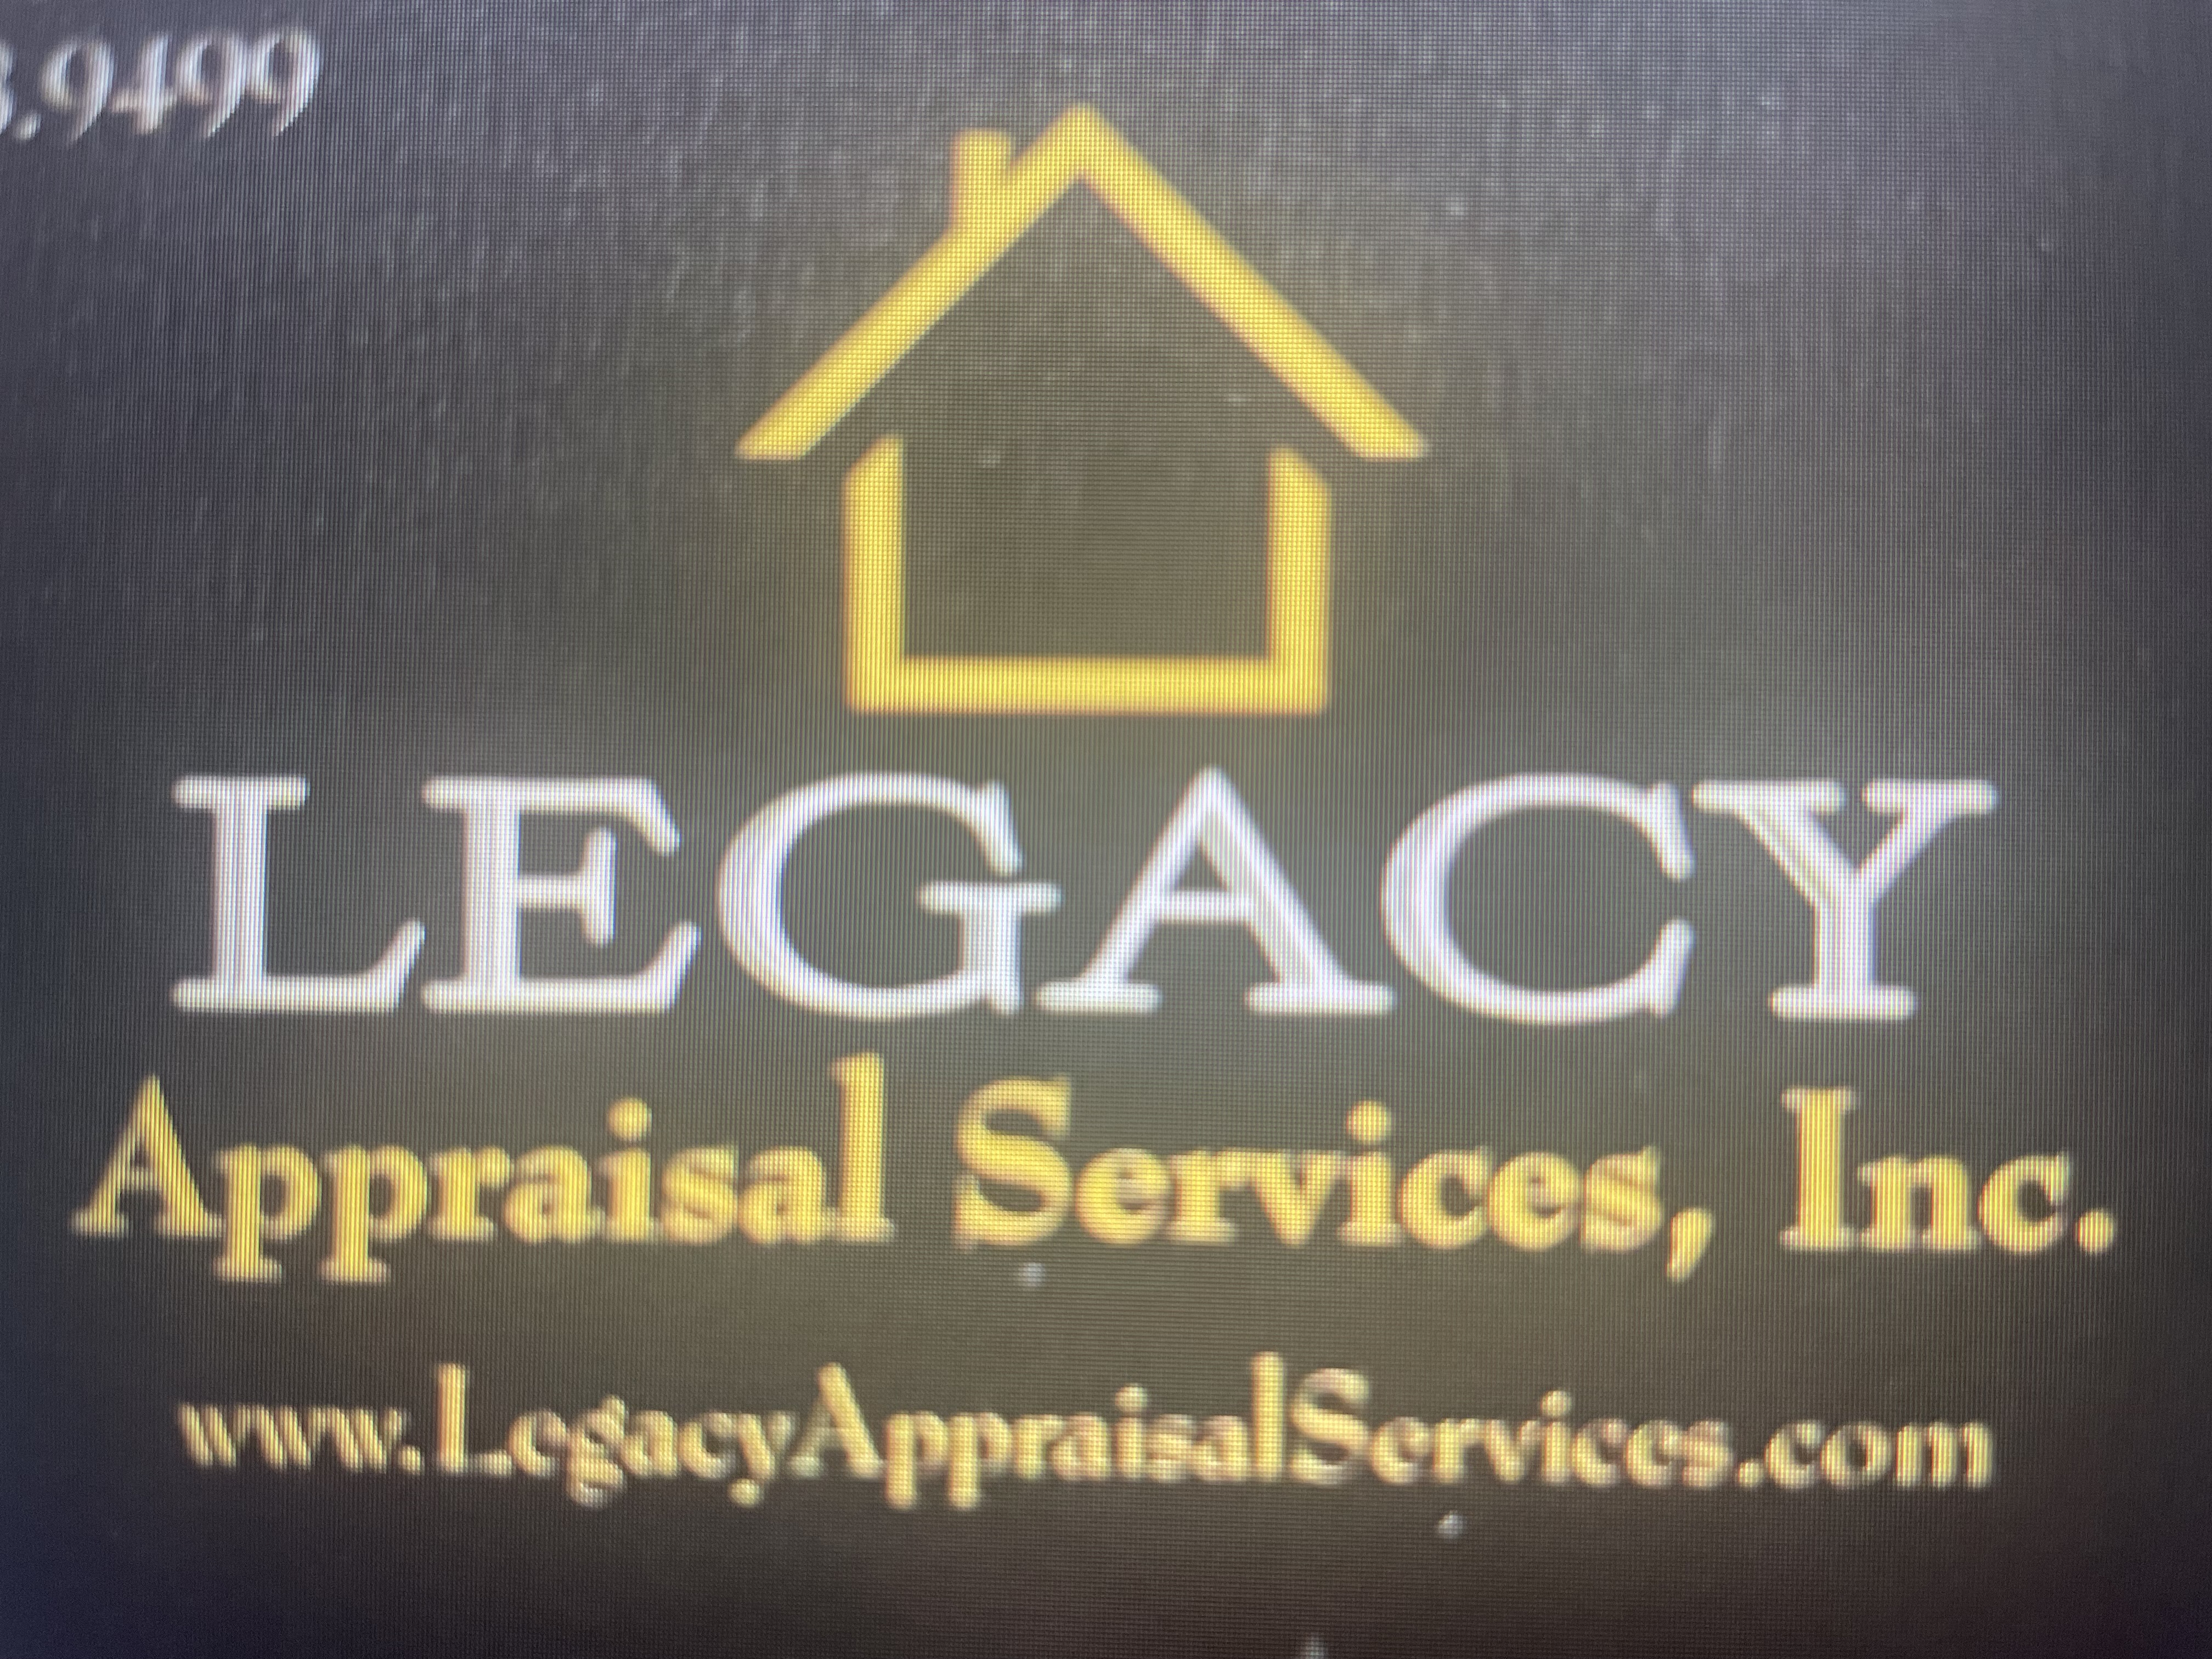 Legacy Appraisal Services, Inc. Logo